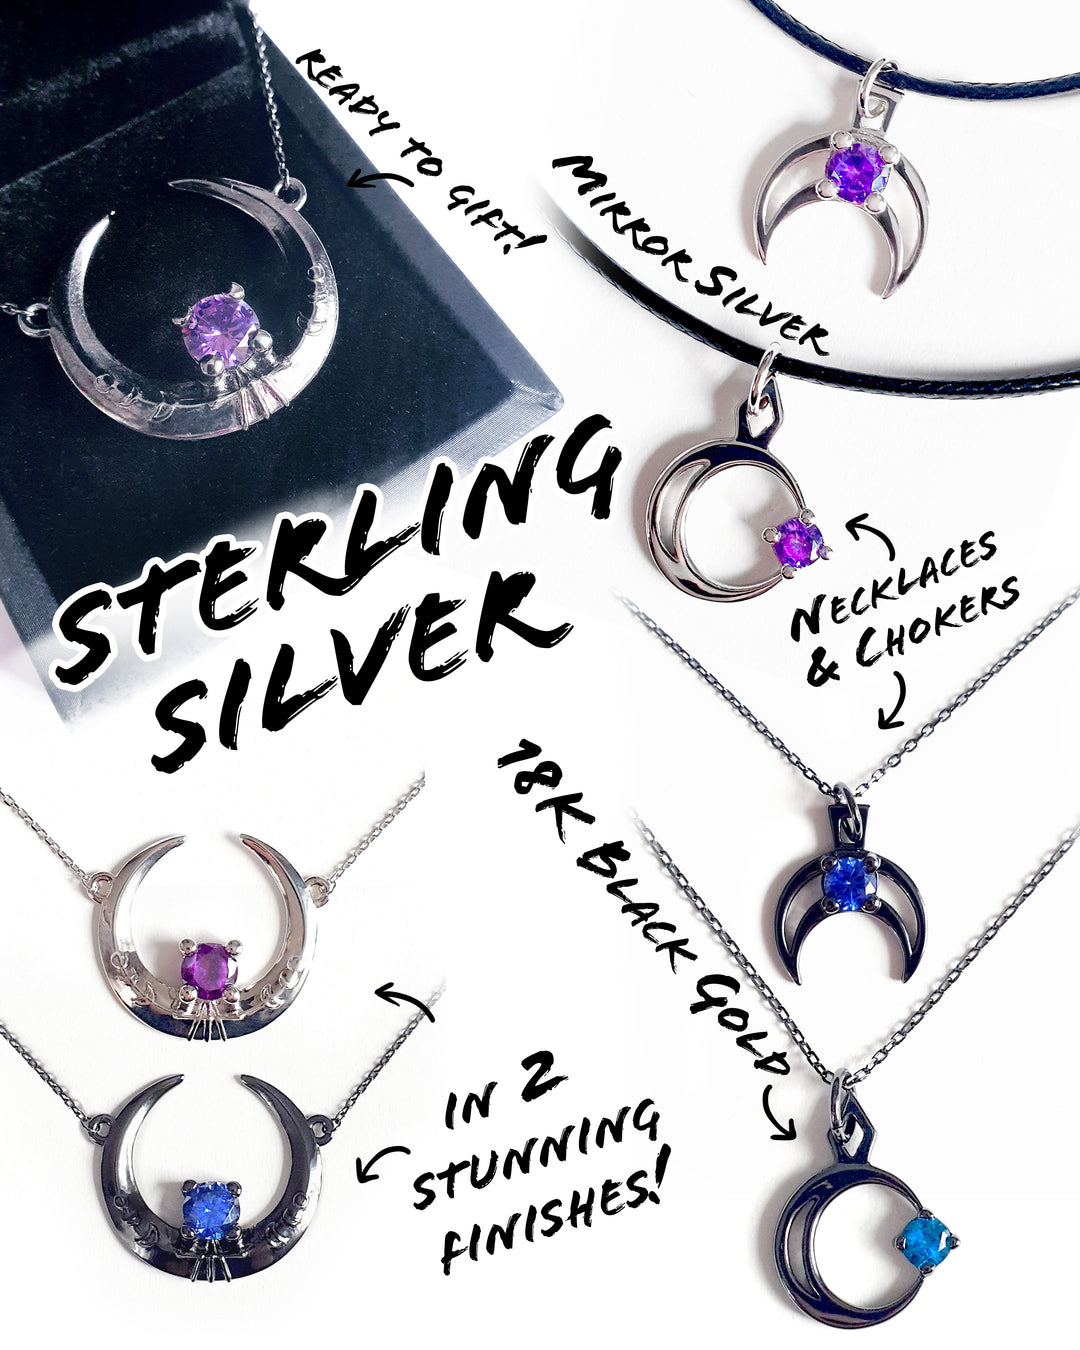 Rhea Black Sterling Silver Necklace